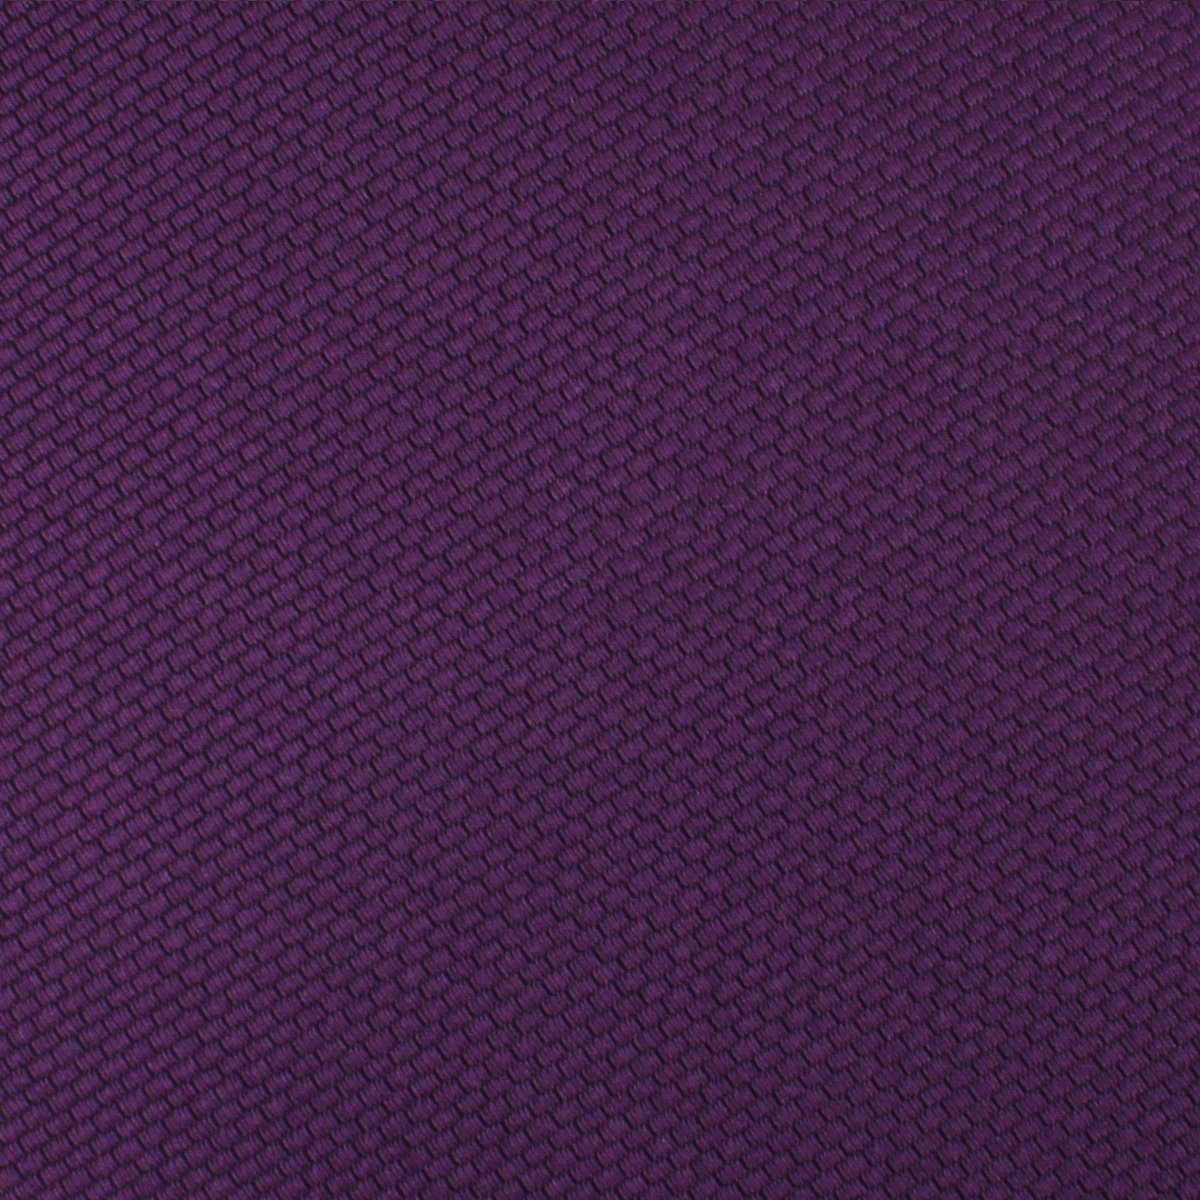 Plum Purple Weave Skinny Tie Fabric